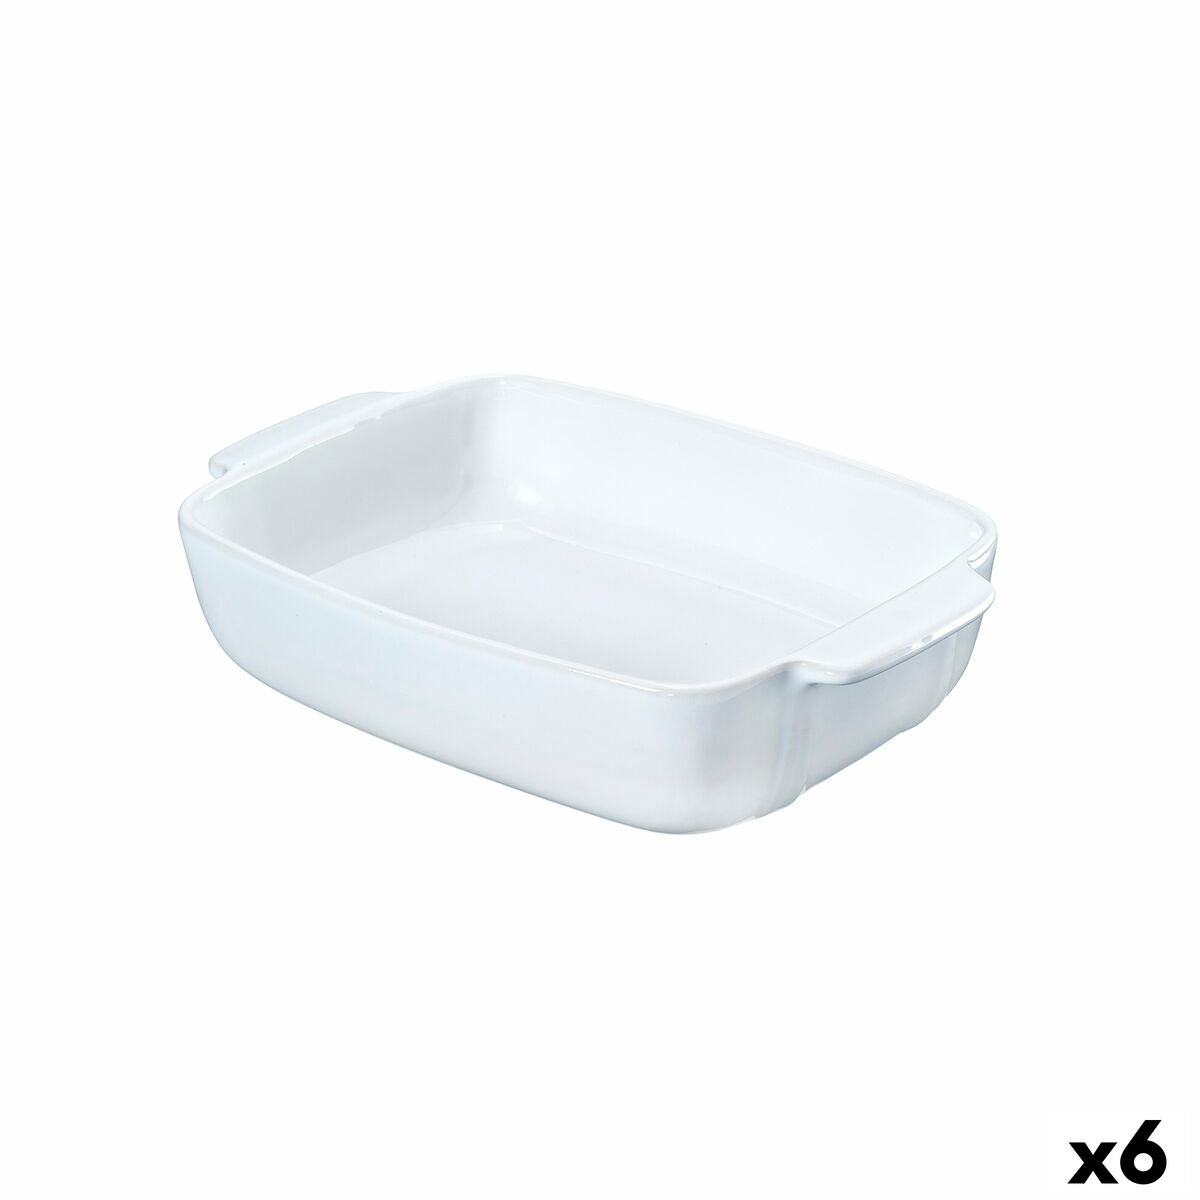 Serving Platter Pyrex Signature White Ceramic Rectangular 25 x 19 x 7 cm (6 Units)